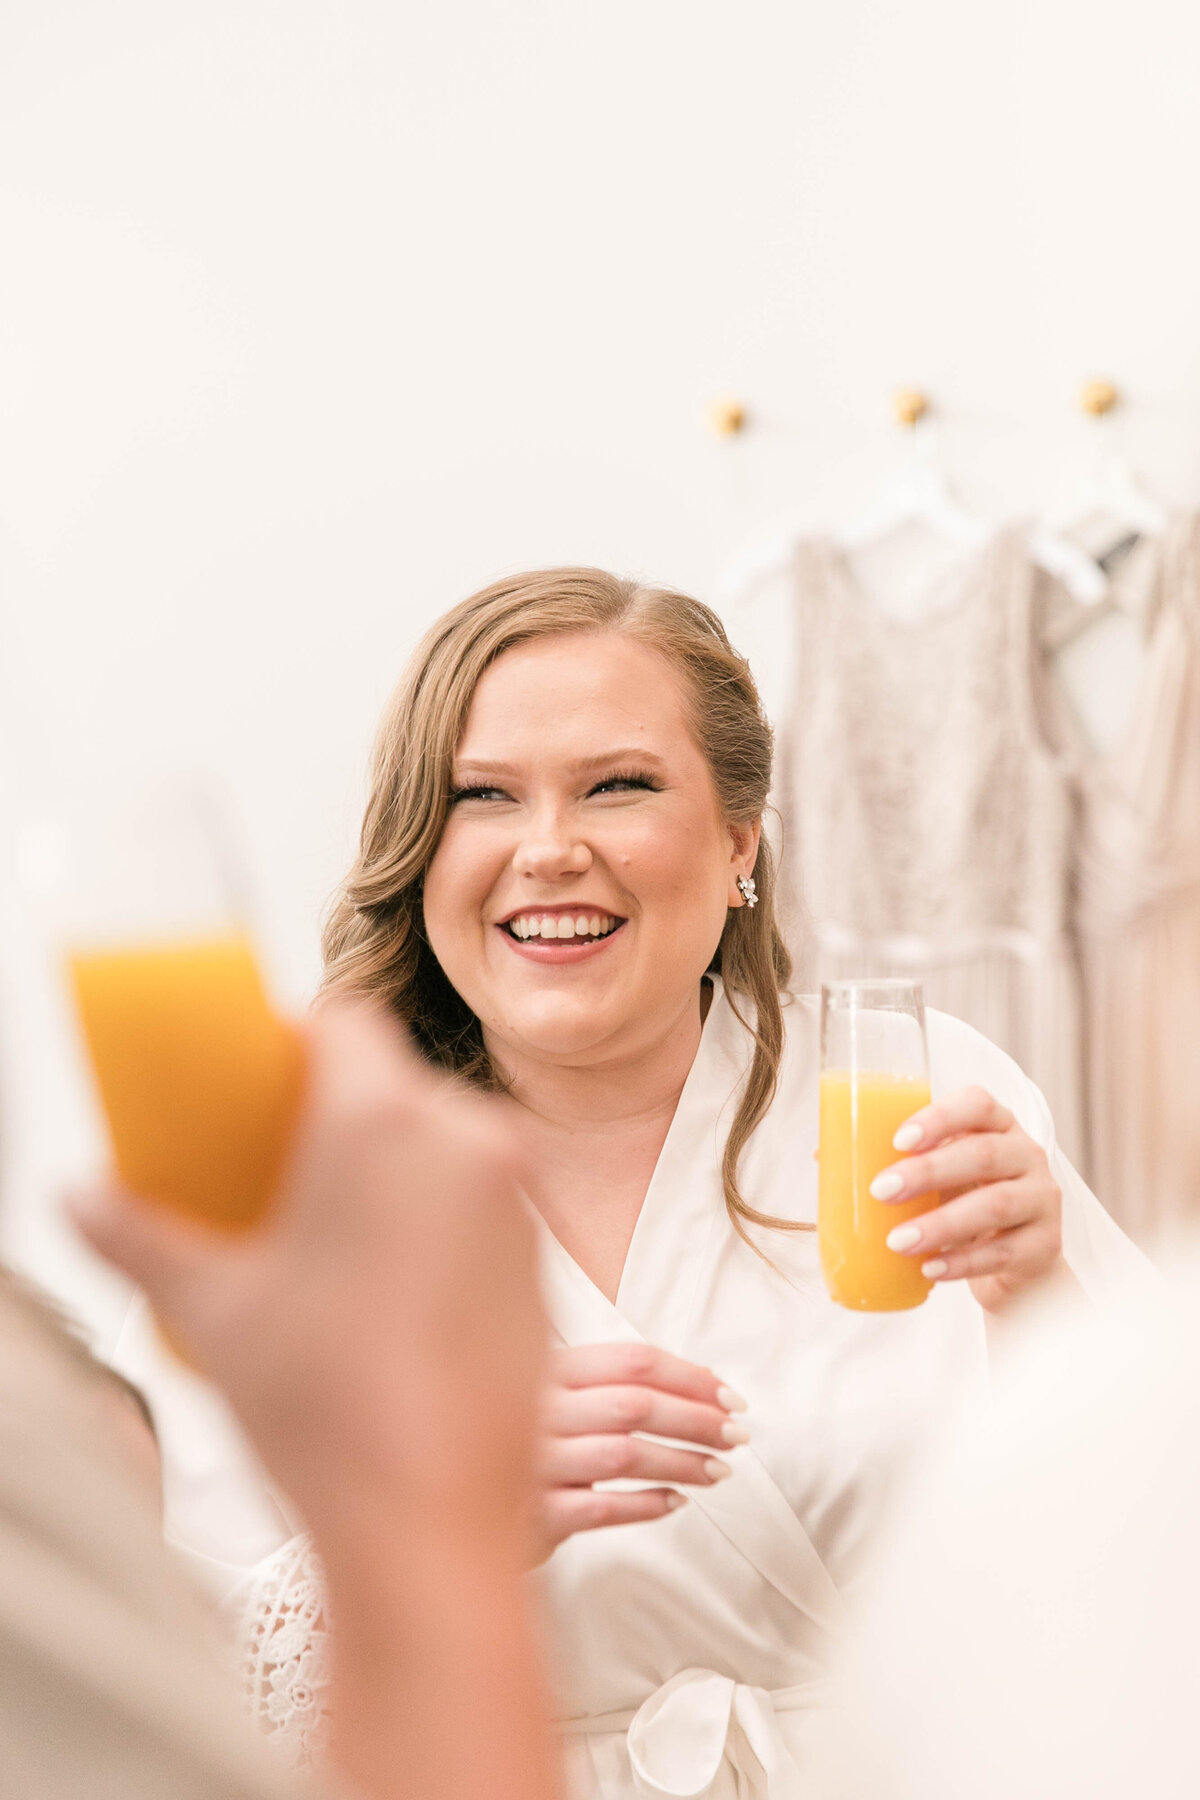 Madison + Wedding Venue + The Eloise + Katie Schubert Photography (39)